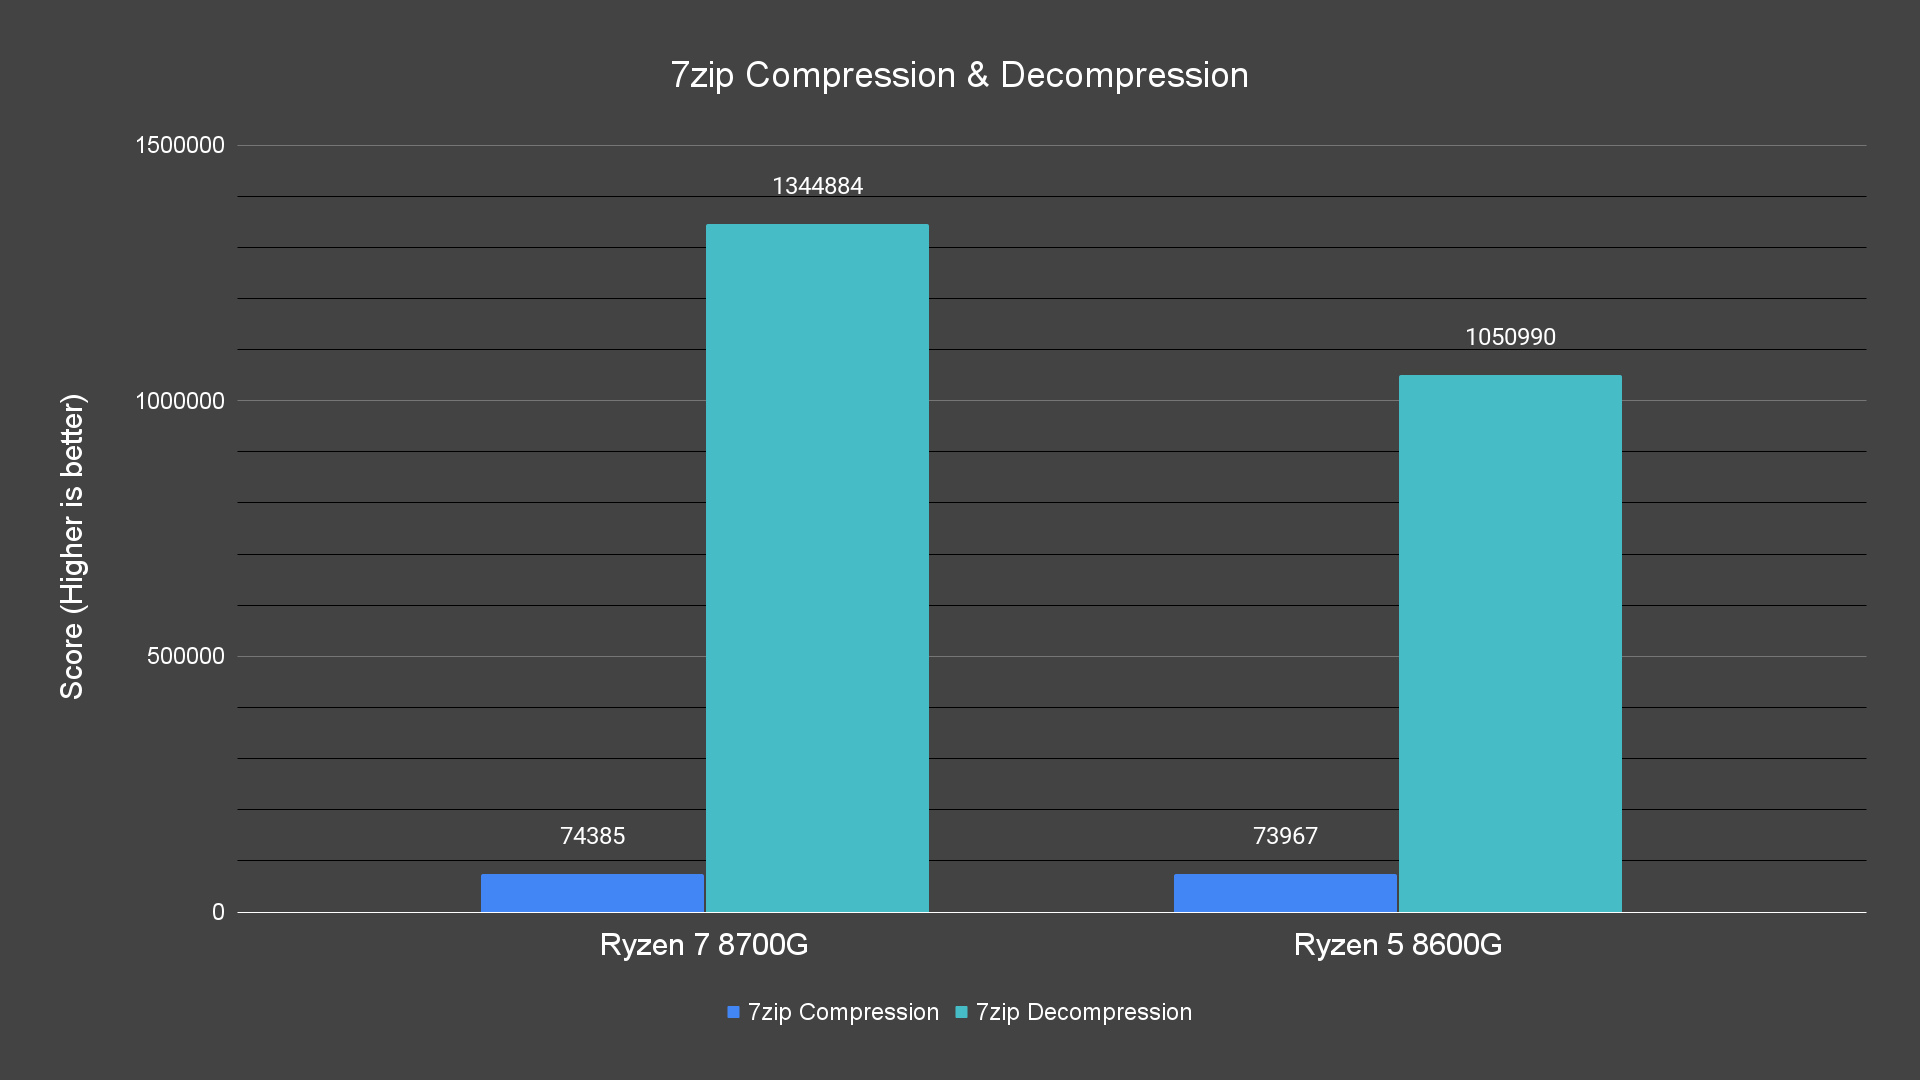 7zip Compression & Decompression